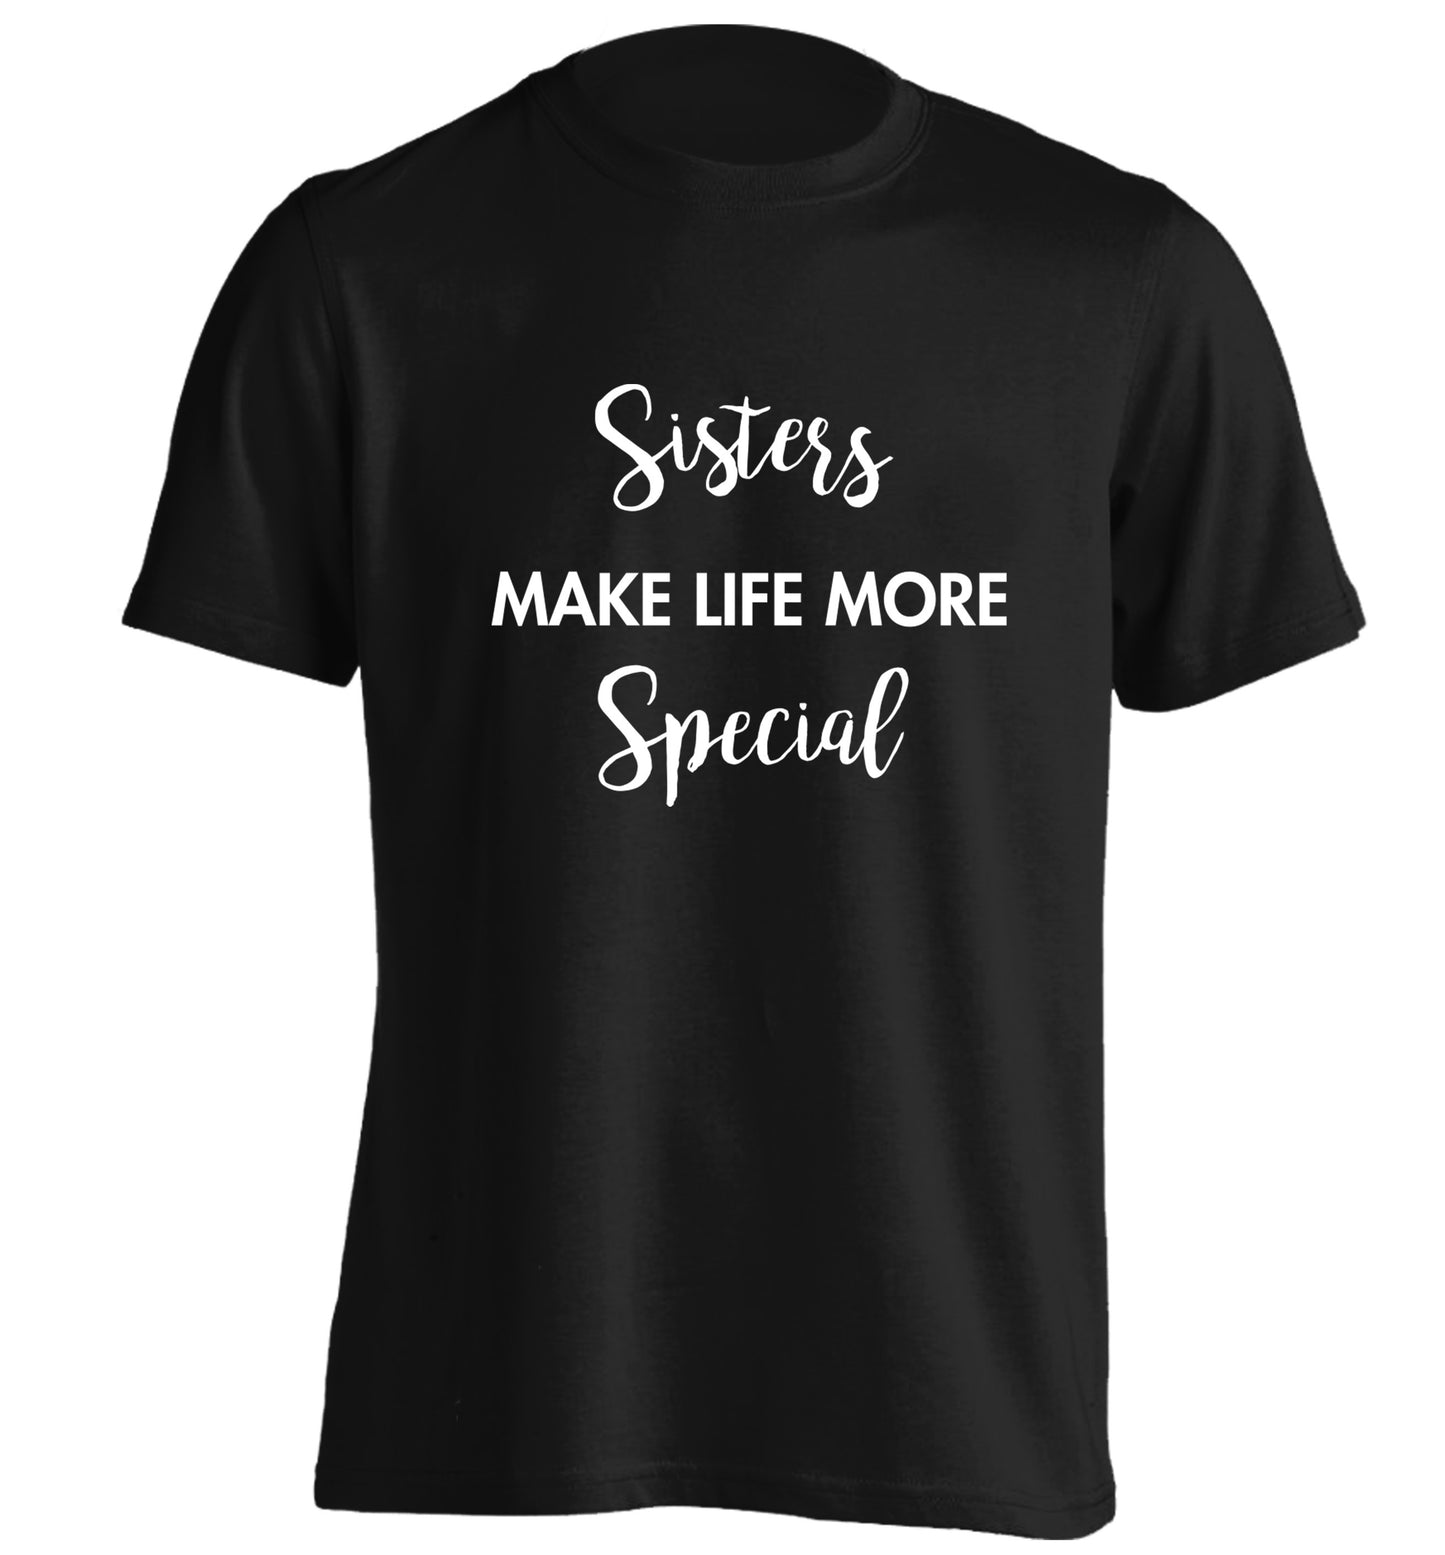 Sisters make life more special adults unisex black Tshirt 2XL